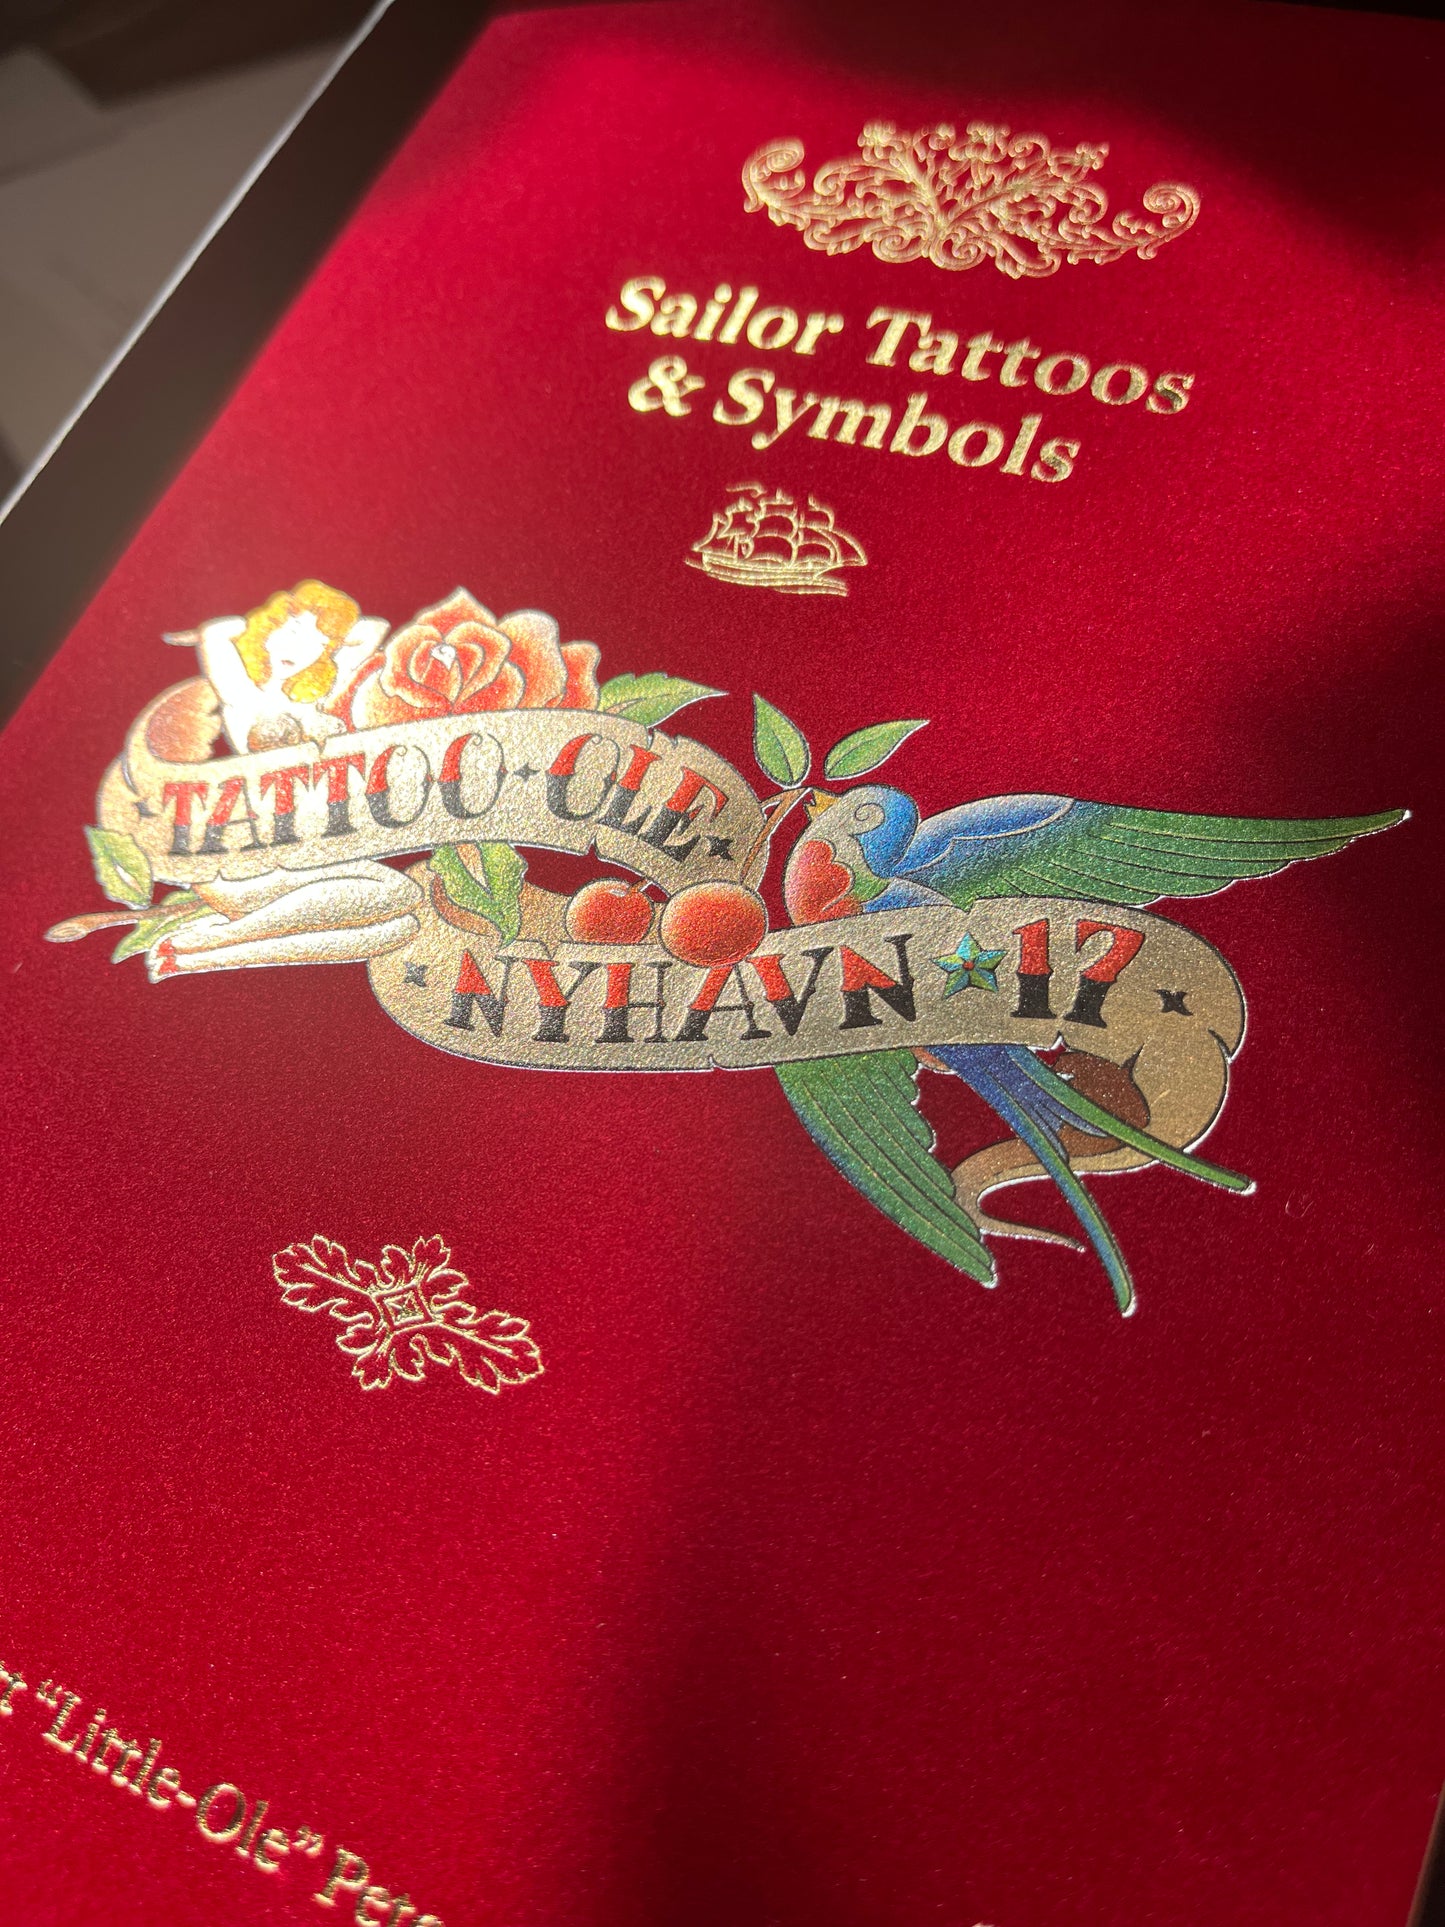 Sailor tattoos & symbols -  By Majbritt "Lille Ole" Petersen, eng. version front left